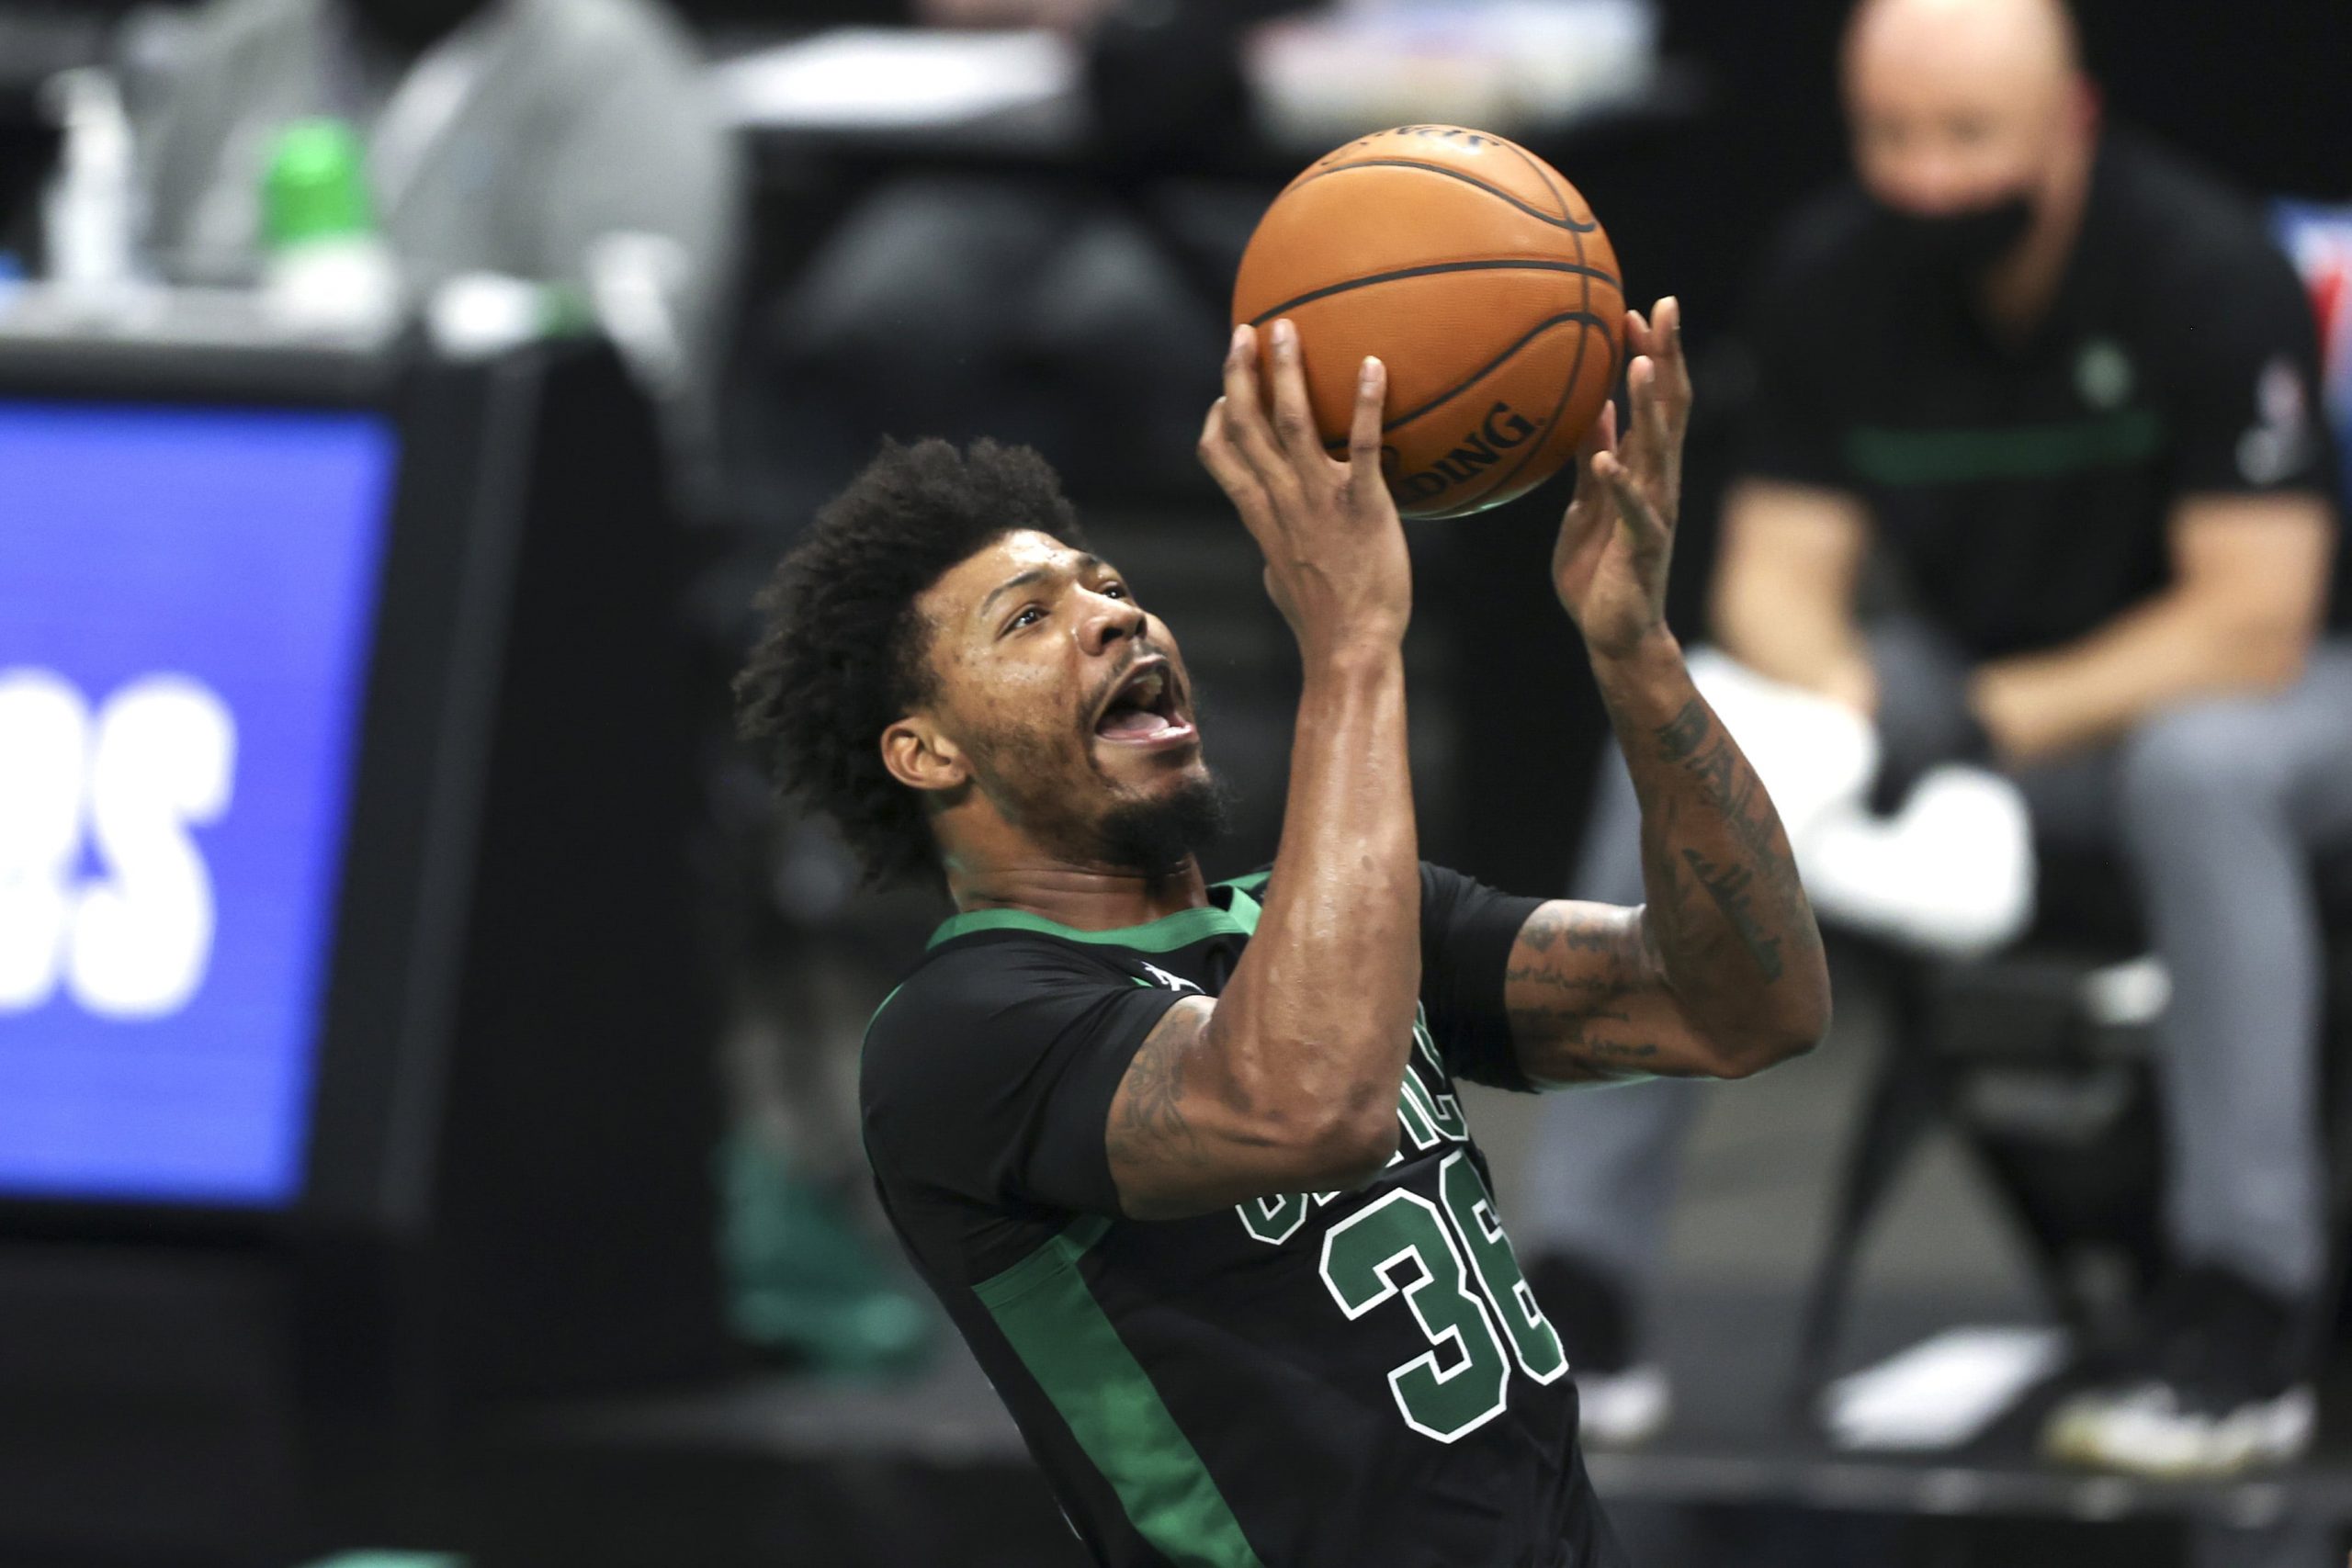 Marcus Smart of the Boston Celtics